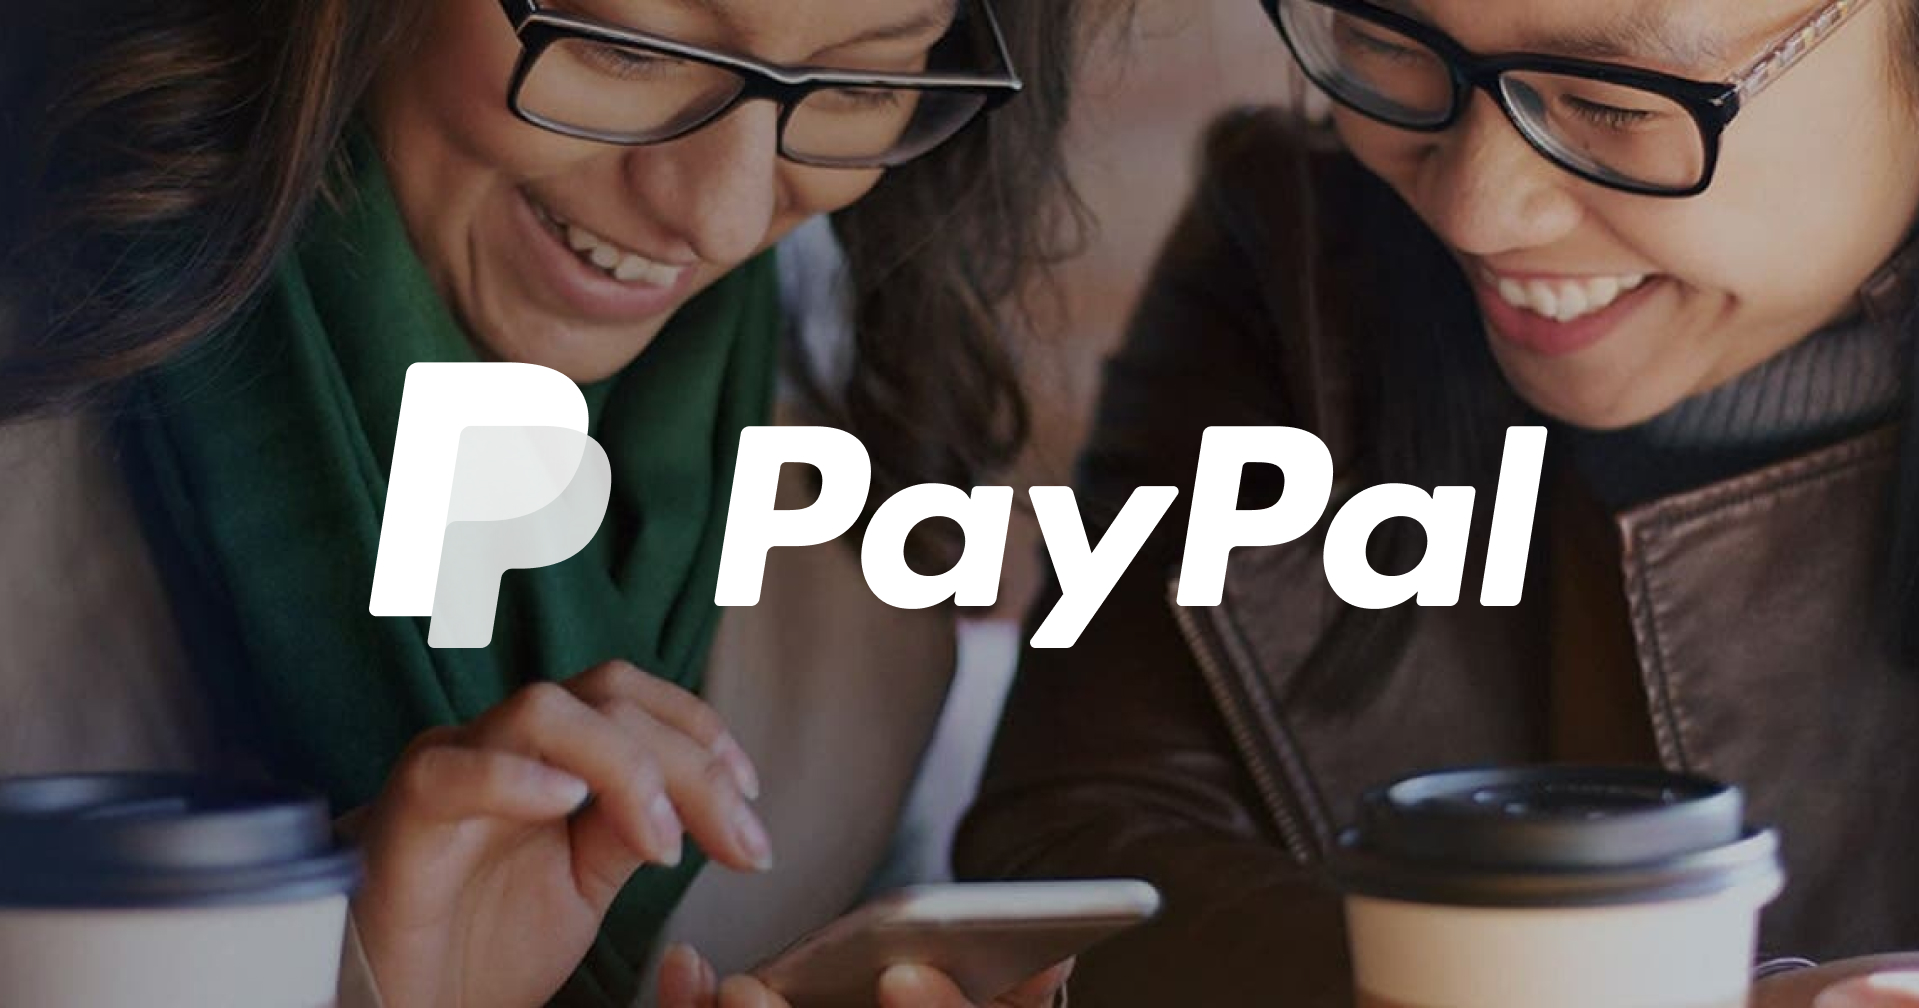 Paypal ปิดระบบวอลเล็ตในไทย 7 มี.ค. ส่งผลผู้ใช้ทั้งหมด การสมัครใหม่ถูกเลื่อนไม่มีกำหนด